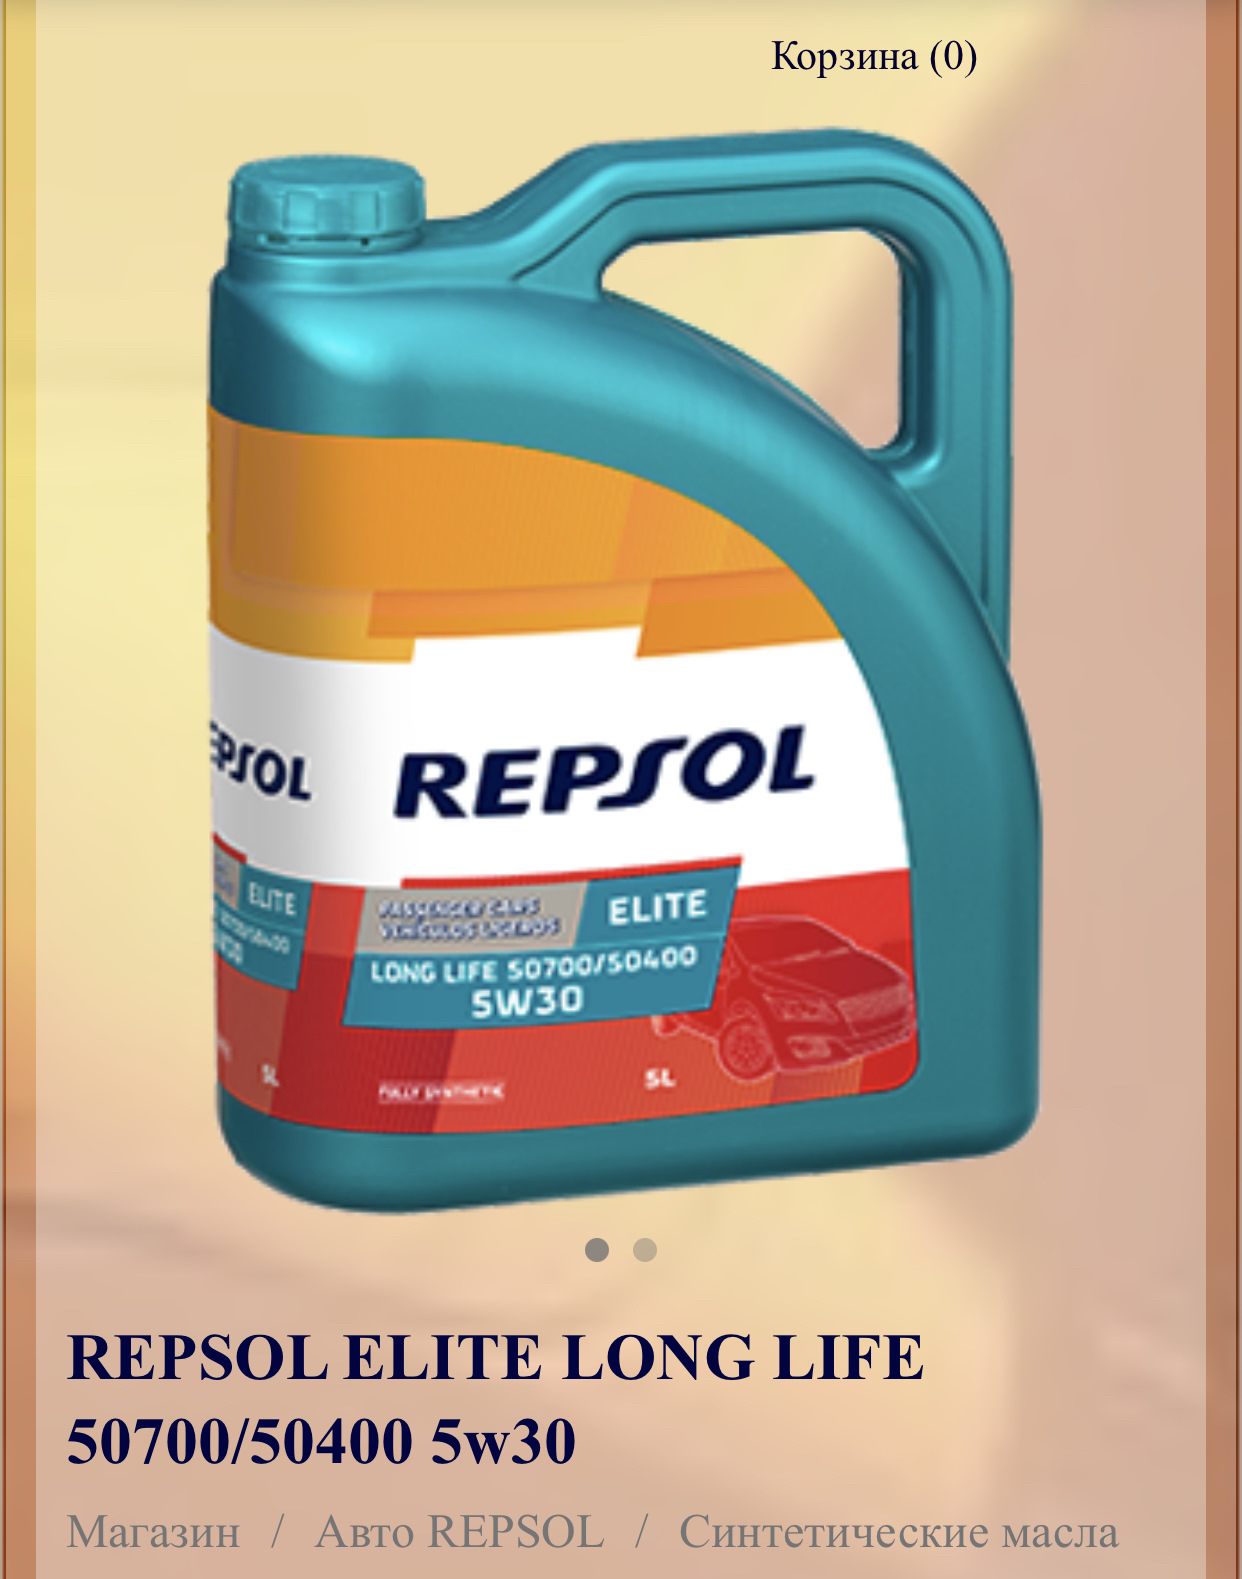 Масло 5w30 long life. Repsol Elite long Life 50700/50400 5w30. Repsol Evolution long Life 5w30. Repsol Evolution 5w30. Repsol 5w30 504.